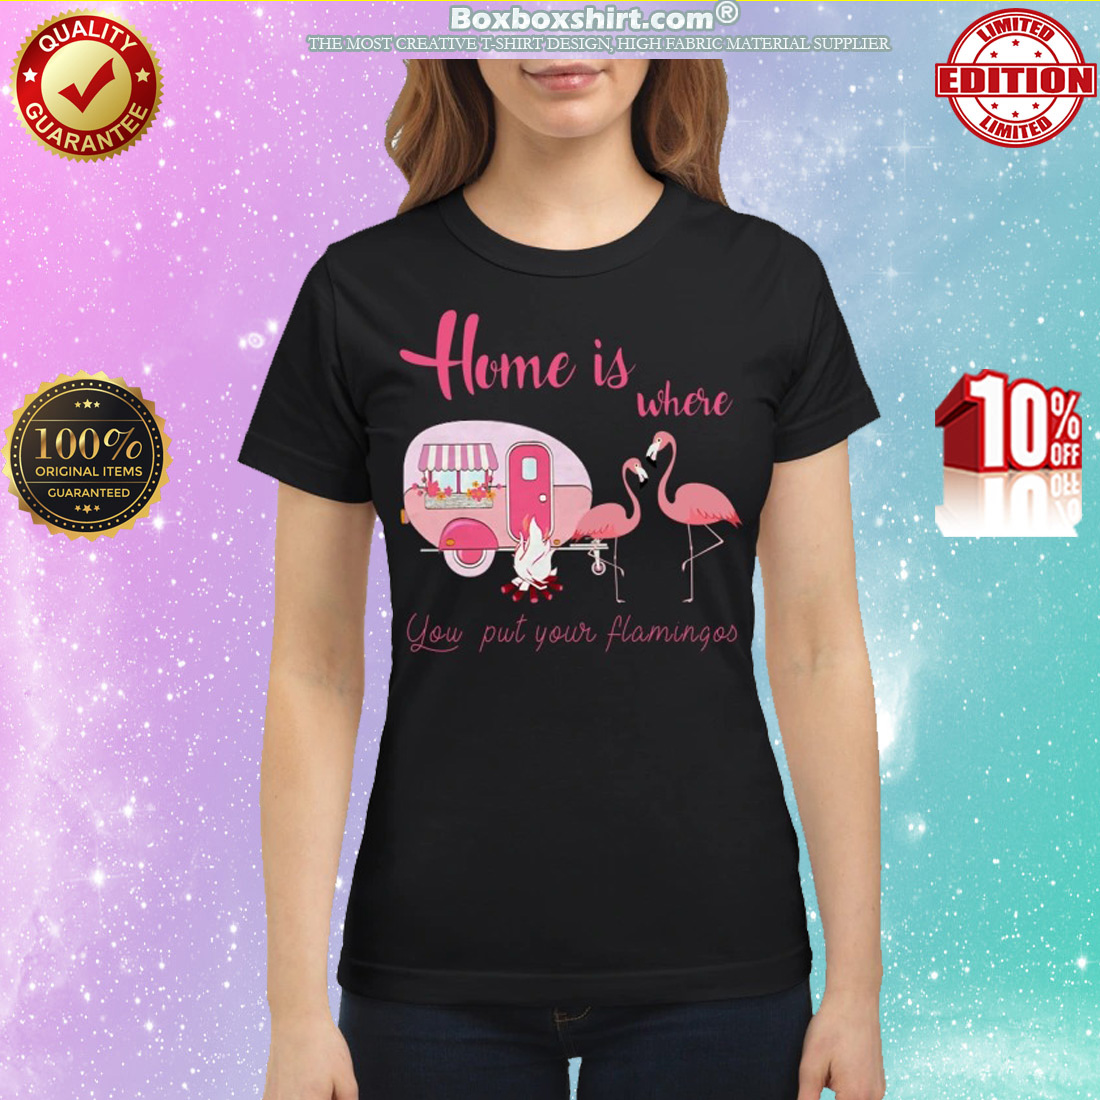 Home is where you put your flamingos shirt